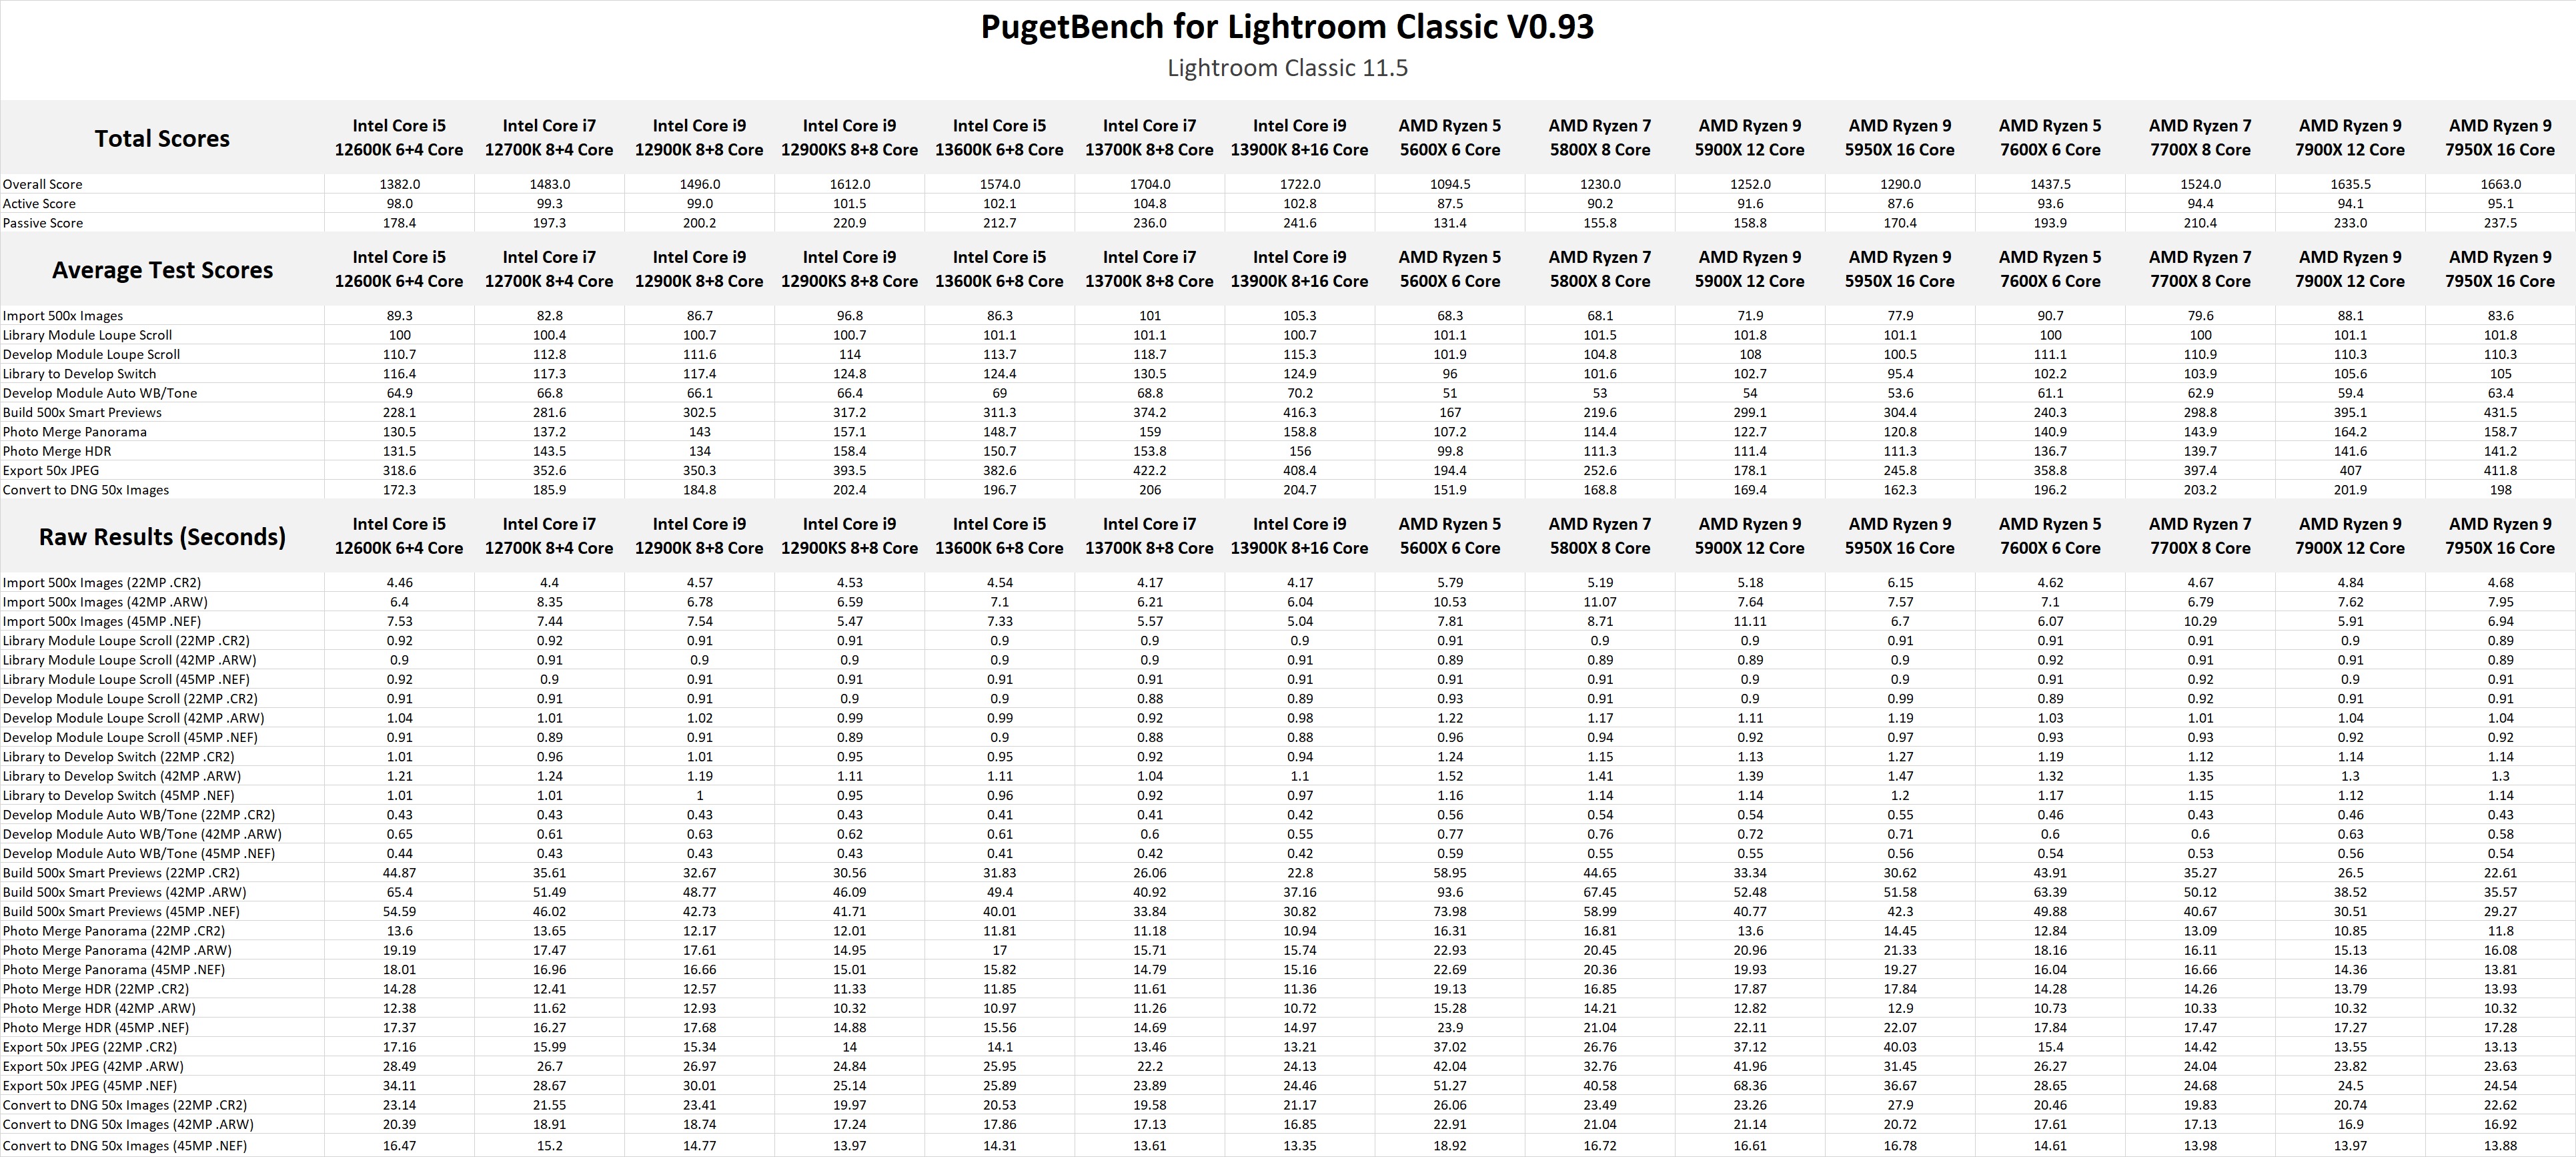 PugetBench for Lightroom Classic 13th Gen Intel Core vs AMD Ryzen 7000 raw results